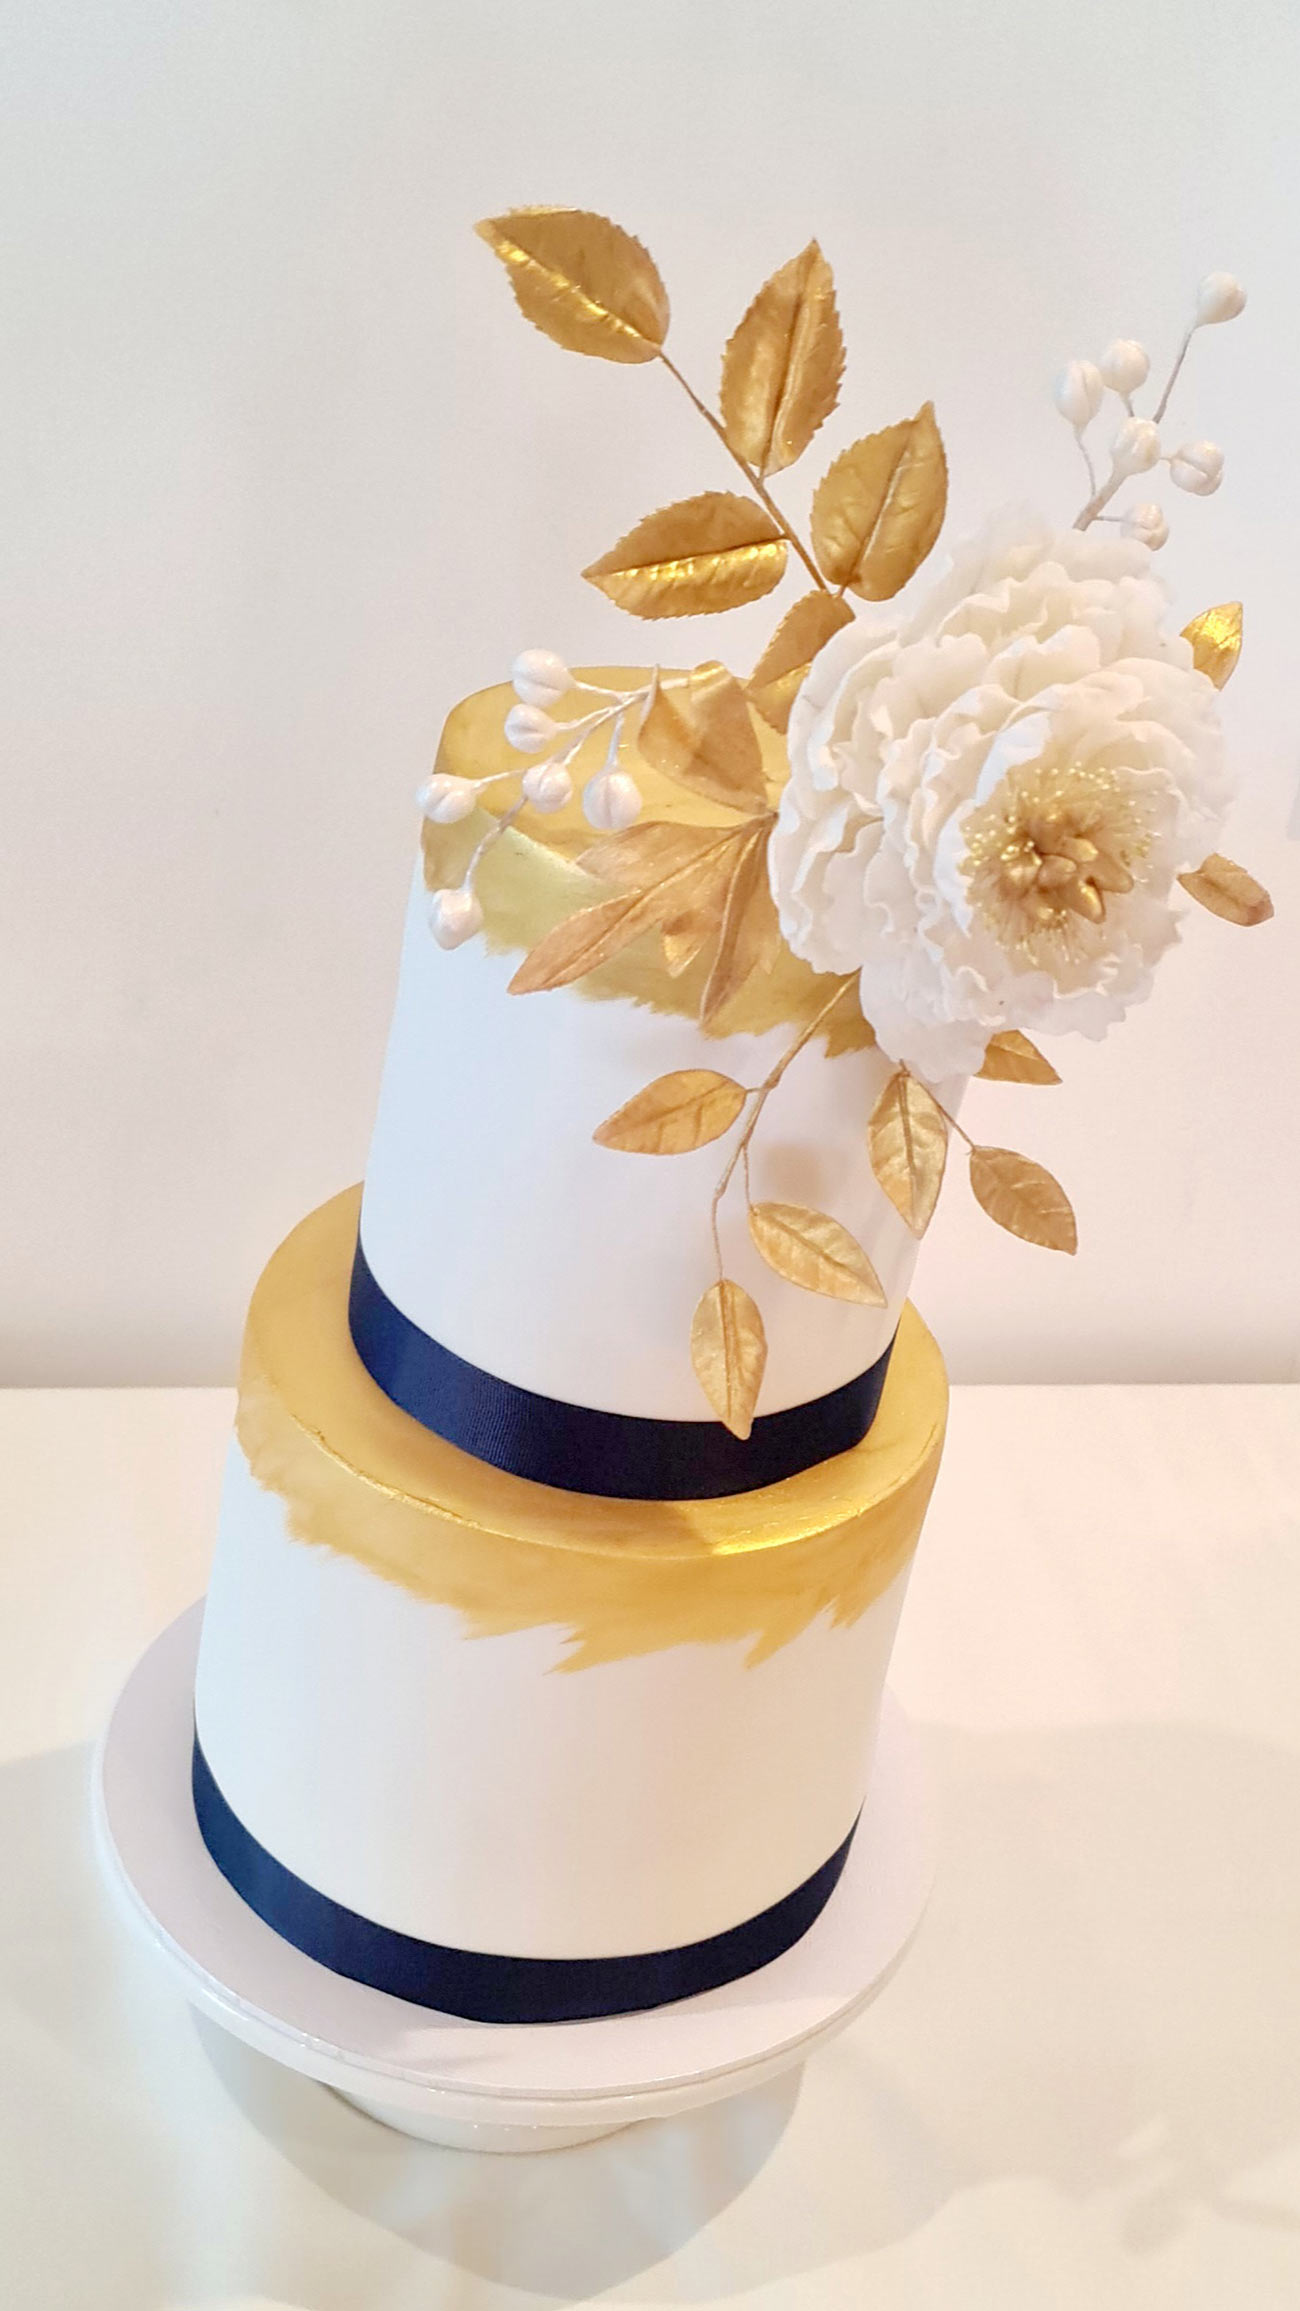 Gold Accents Wedding Cake Feature Wed Bride Groom Cornwall Devon3